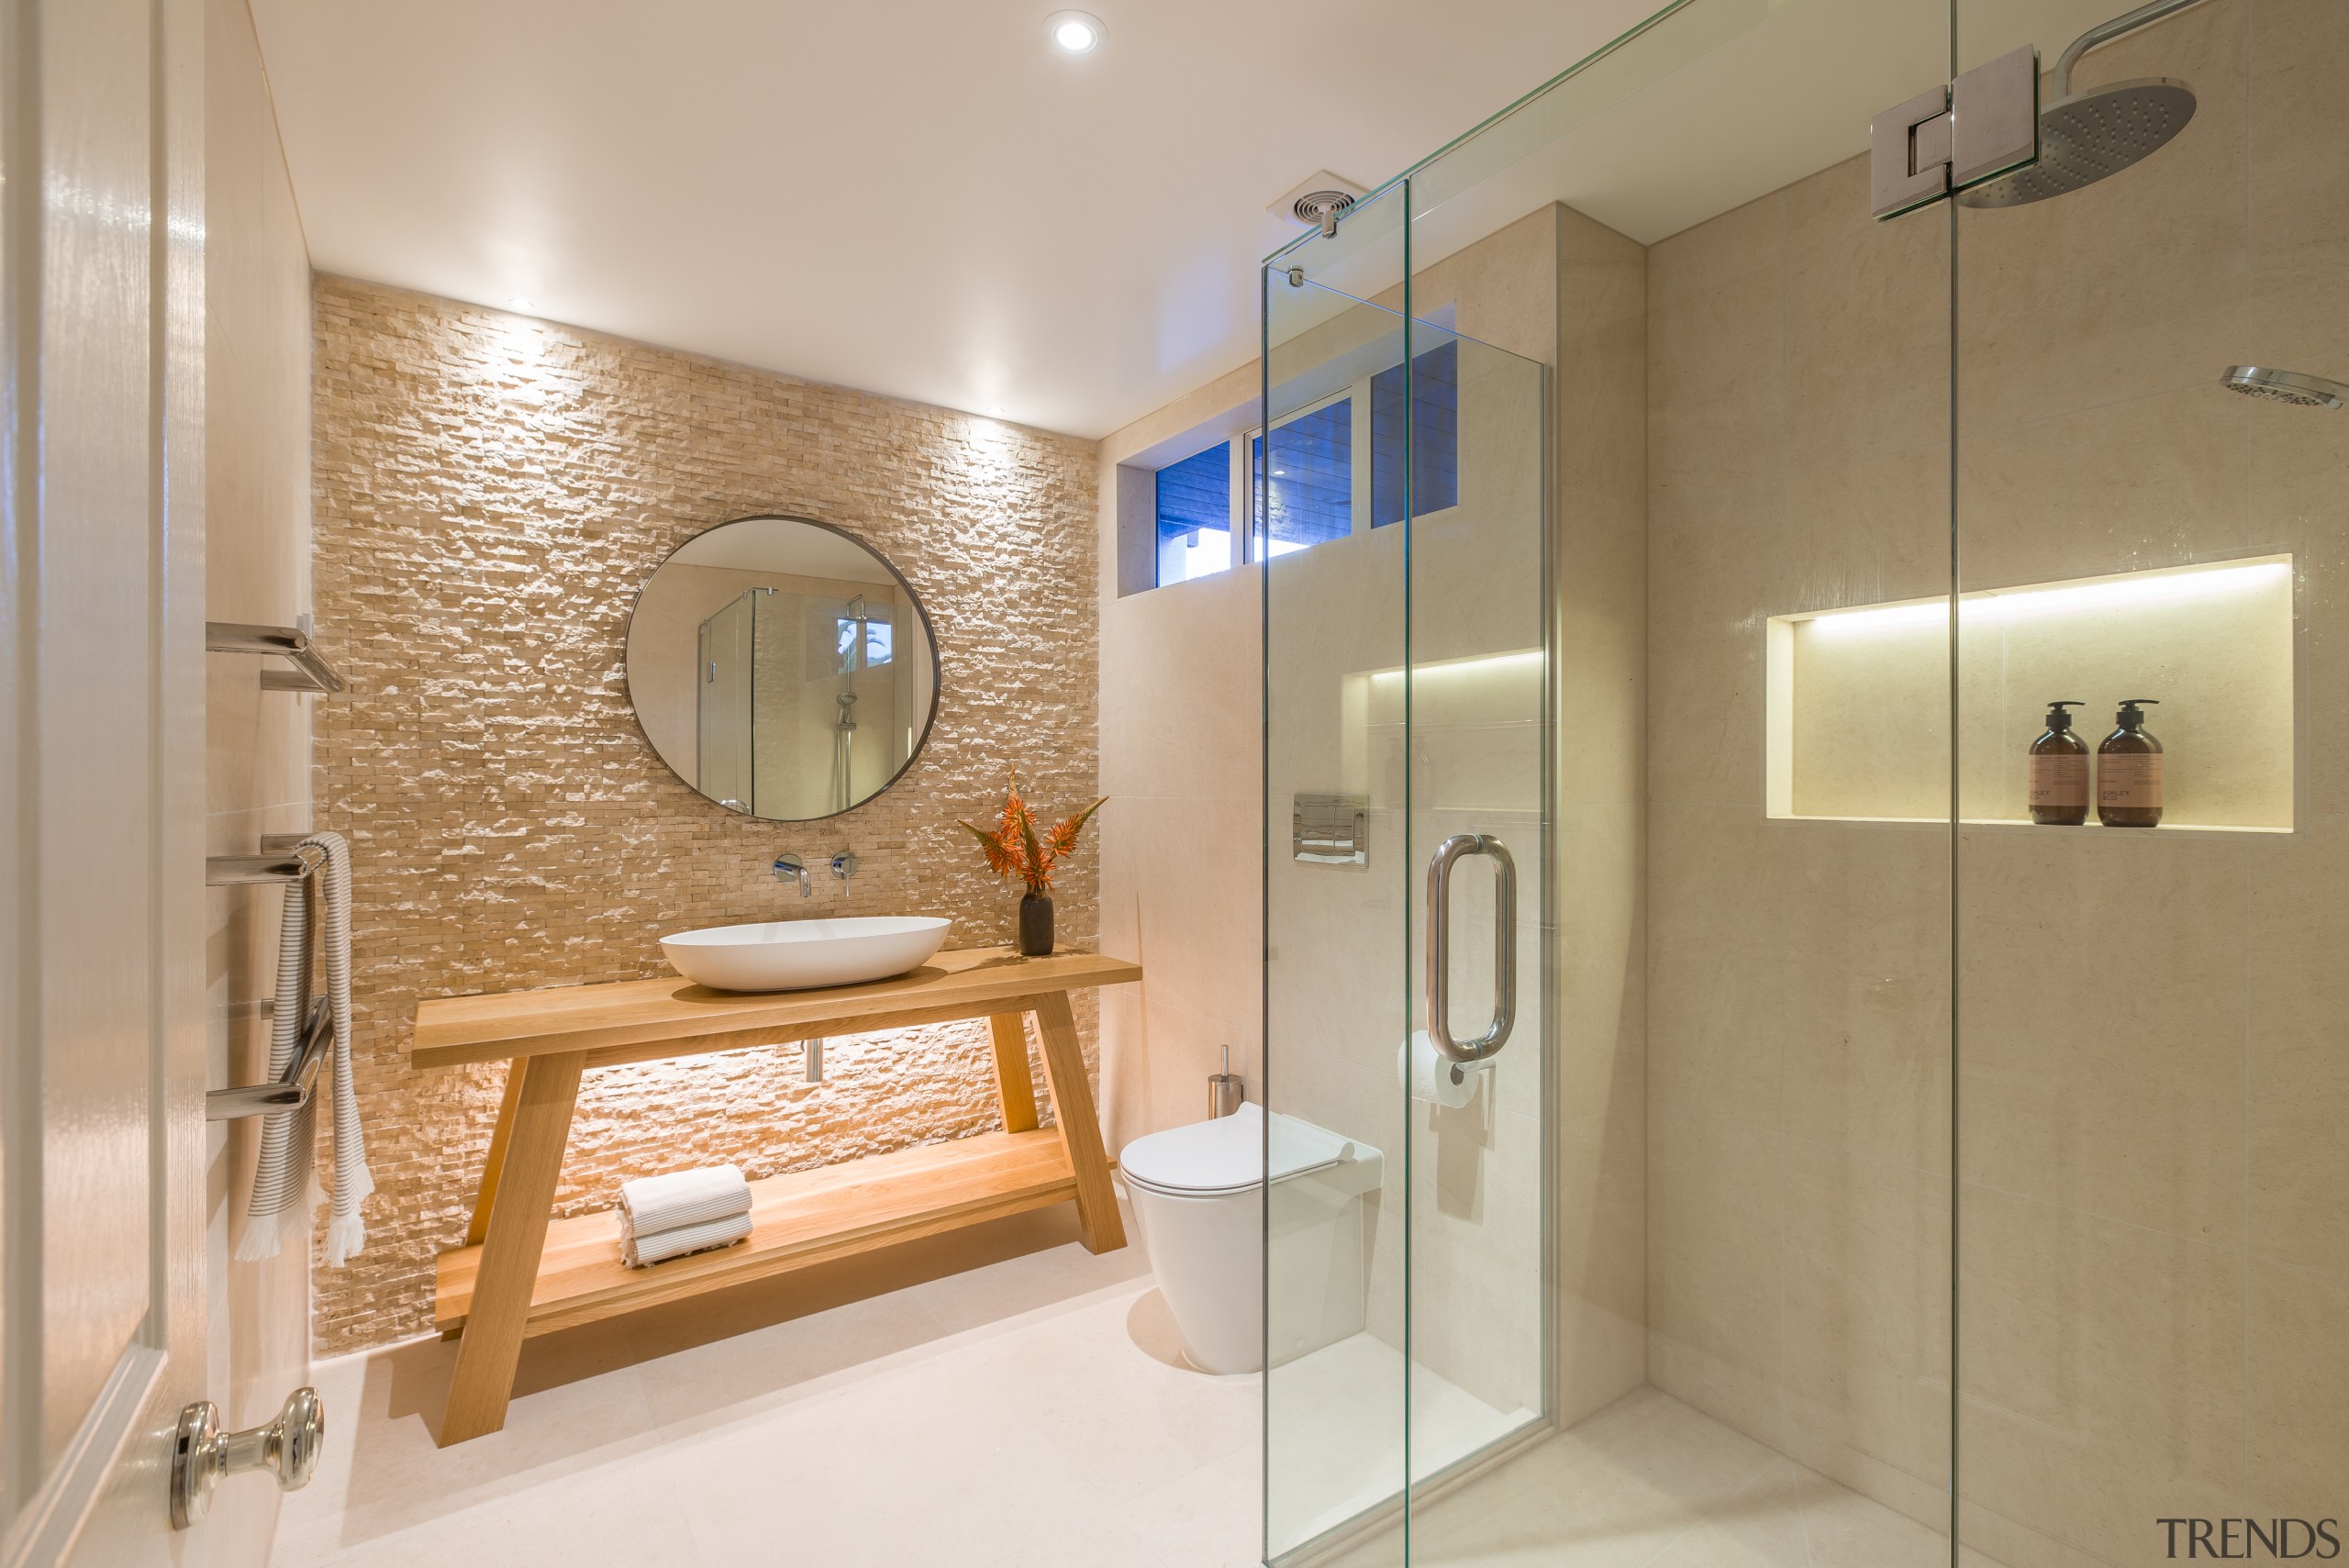 2018 TIDA New Zealand Designer Powder/guest room Winner bathroom, home, interior design, real estate, room, brown, gray